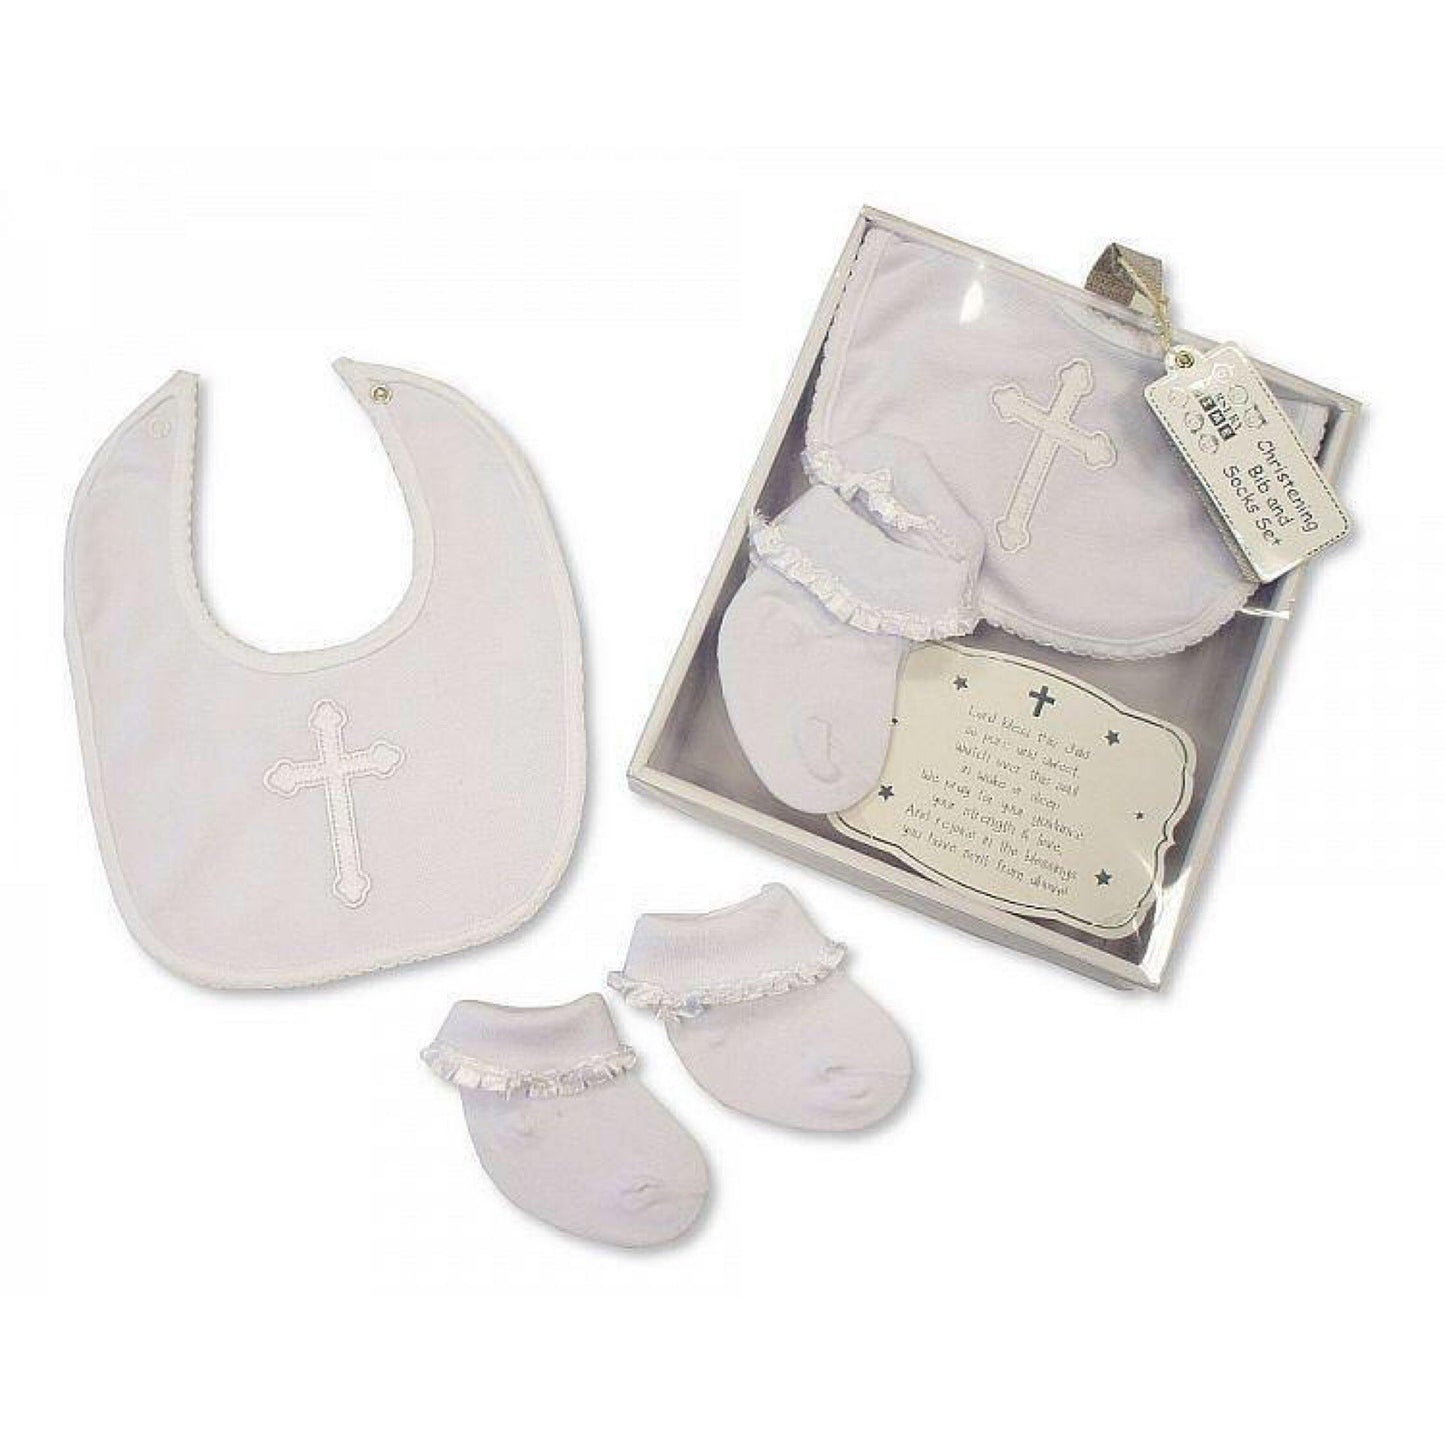 Baby Christening Bib & Sock Set | Oscar & Me | Baby & Children’s Clothing & Accessories